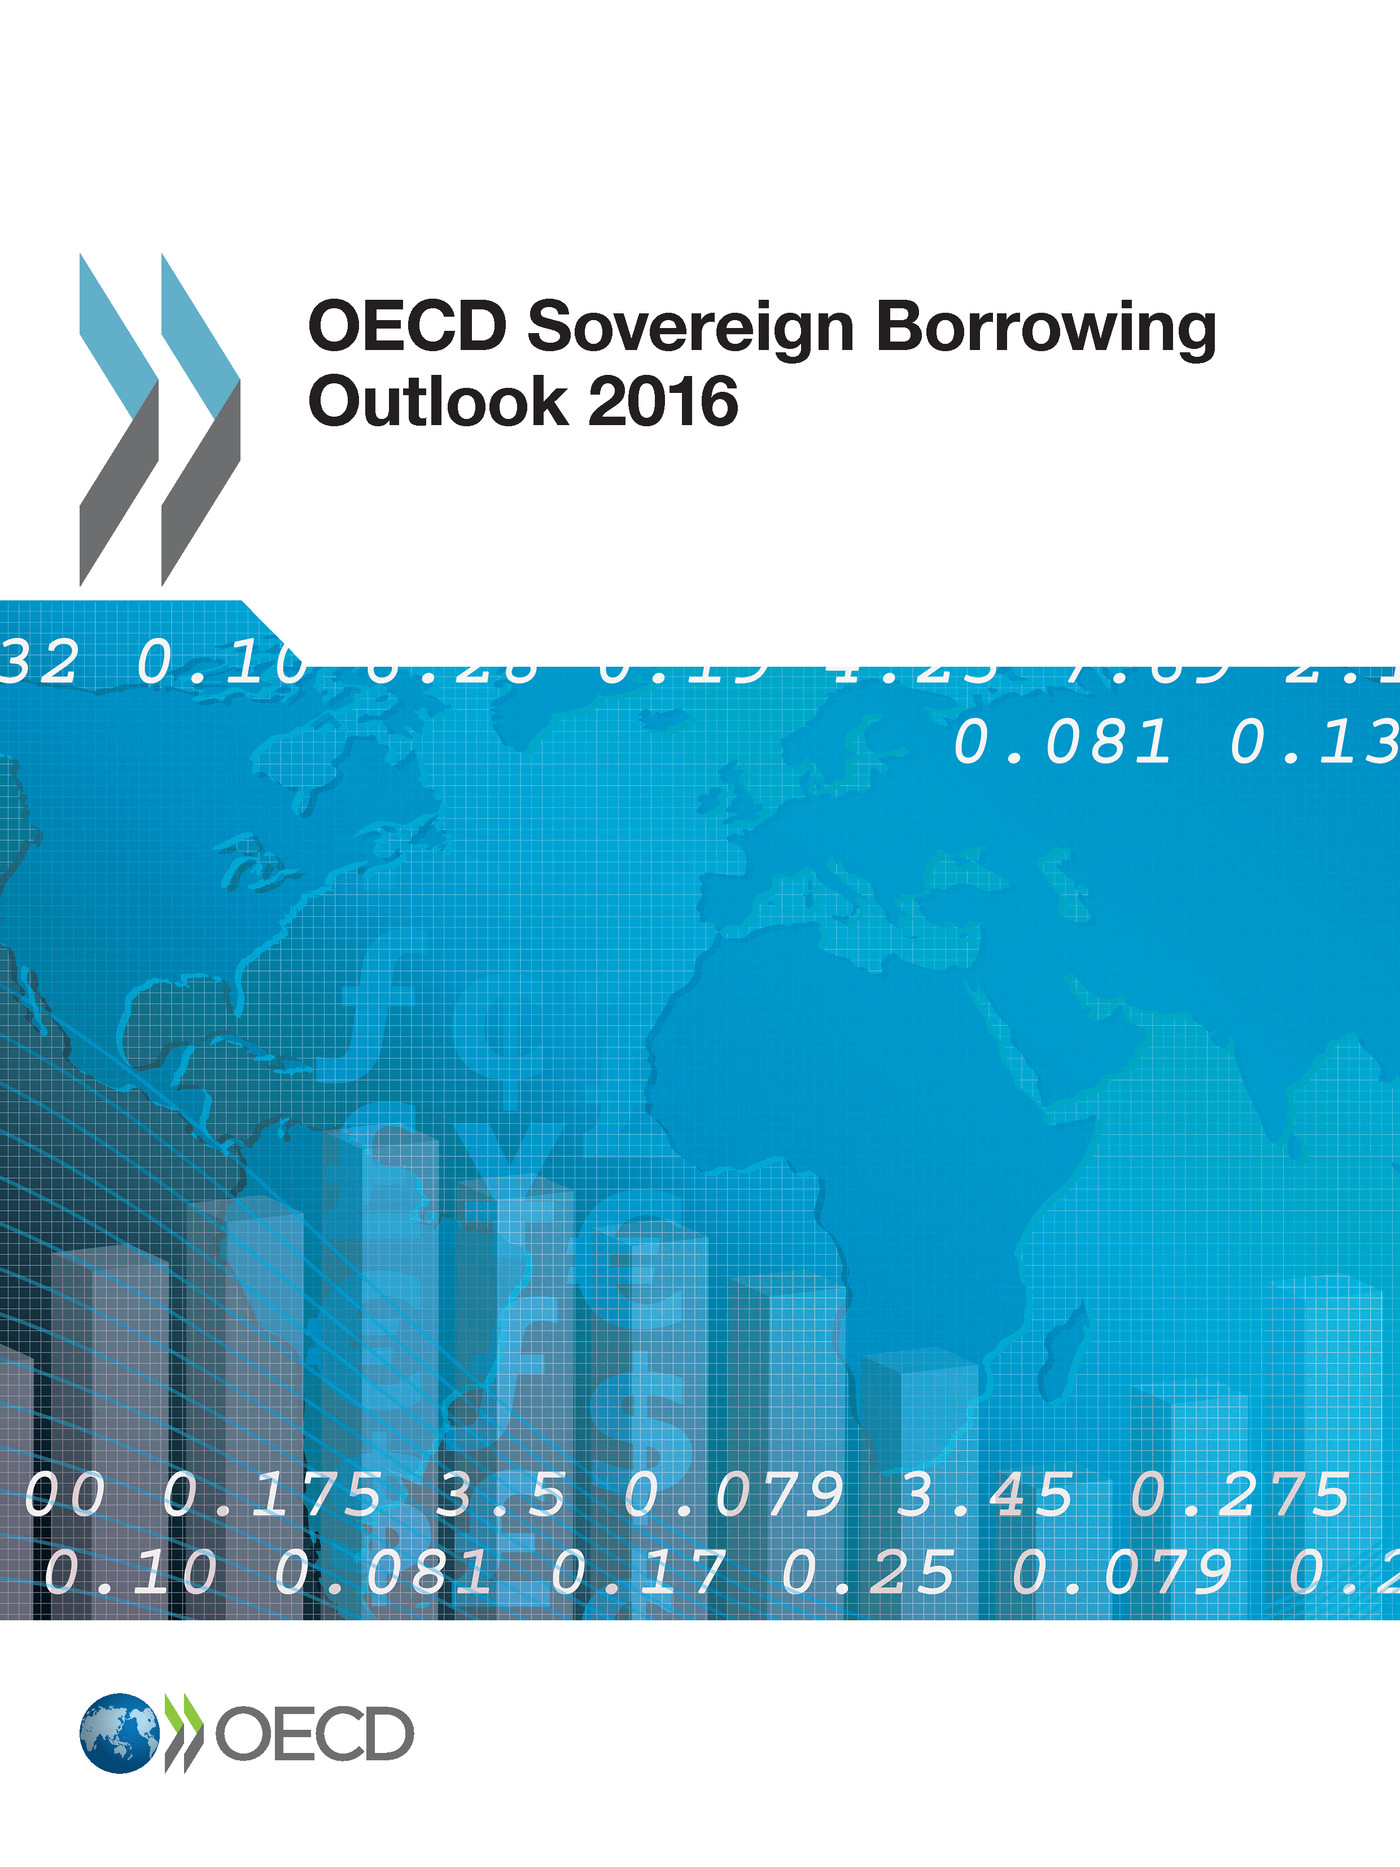 OECD Sovereign Borrowing Outlook 2016 -  Collectif - OCDE / OECD